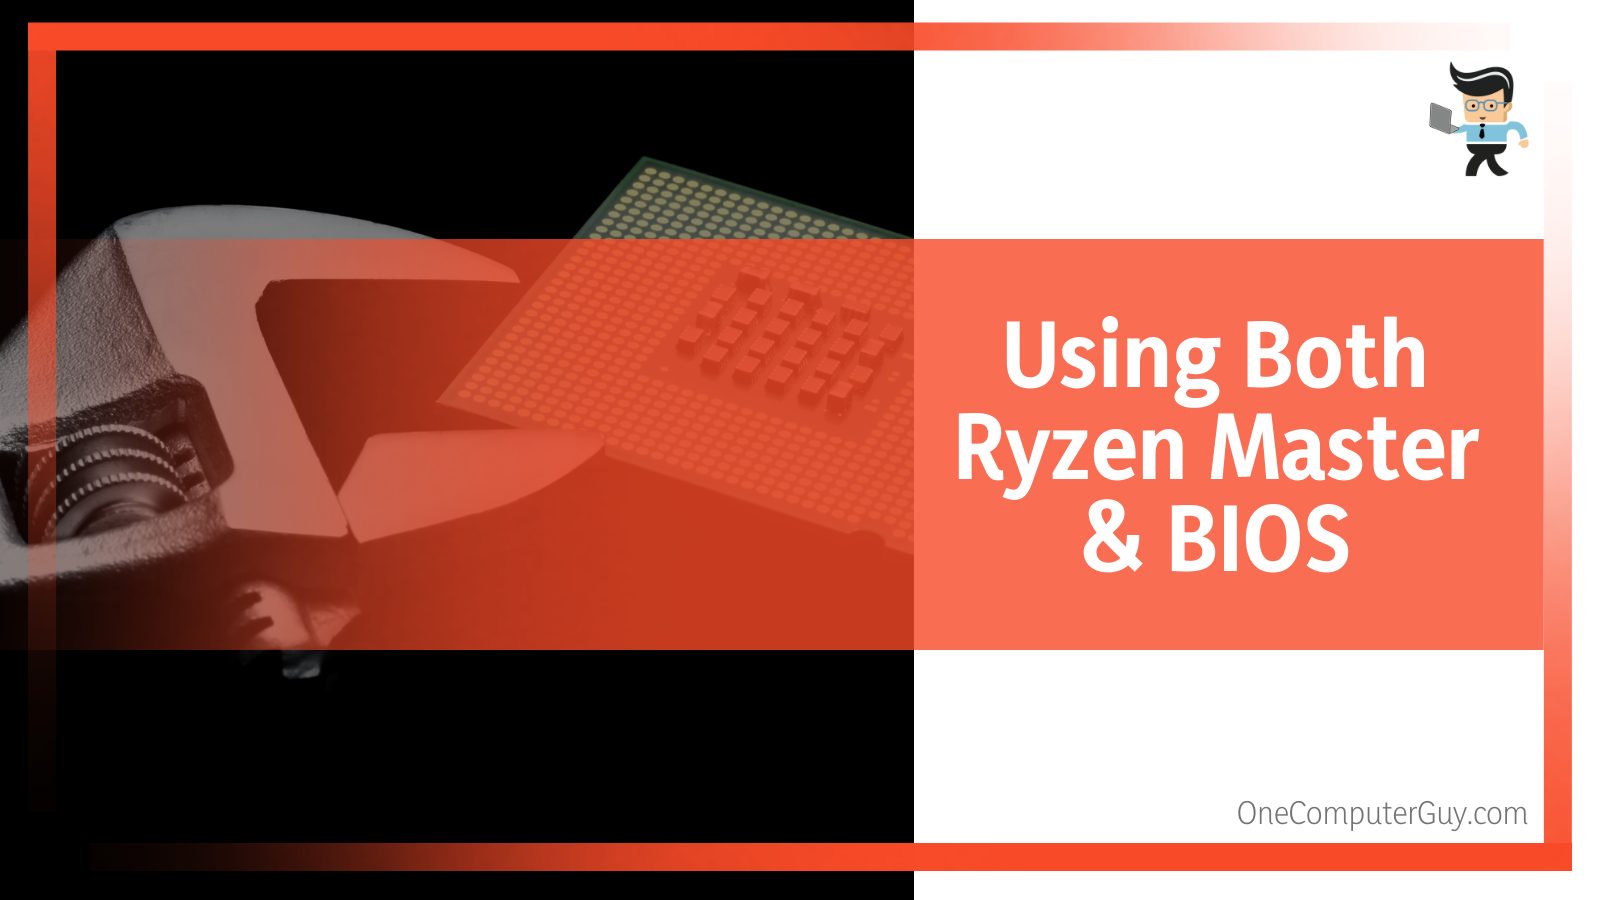 Ryzen Master Vs BIOS Gaming Overclocking